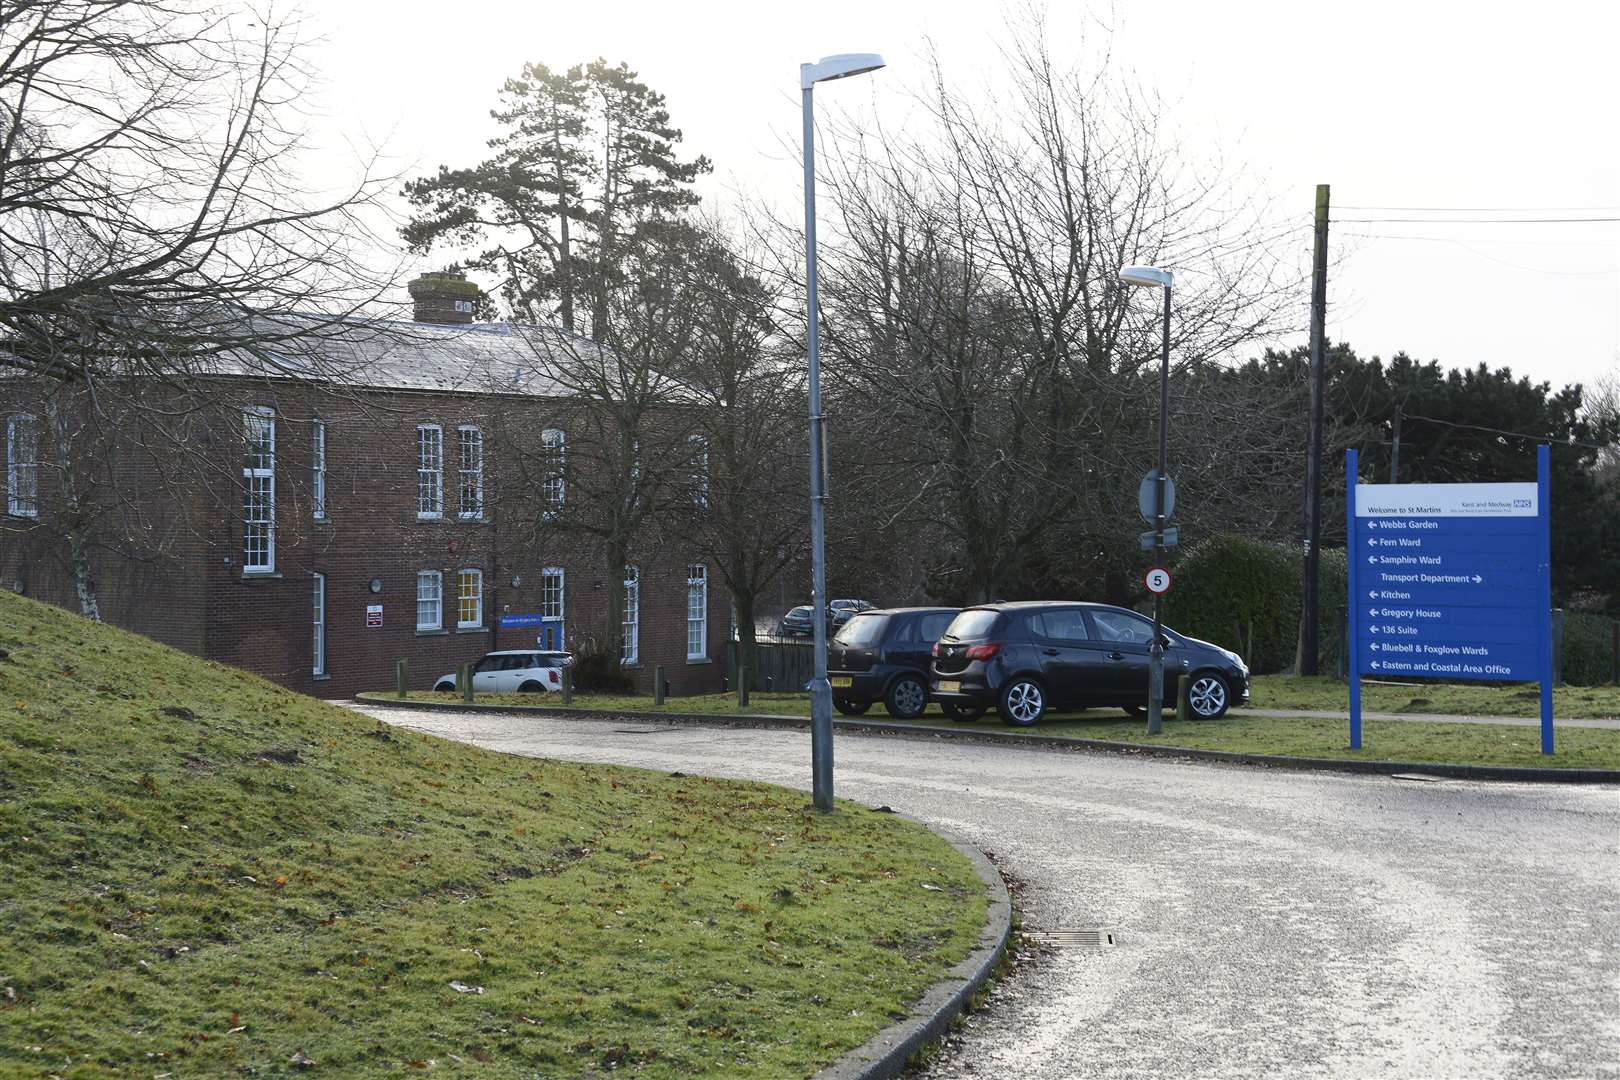 Canterbury's St Martin's Hospital is a mental health facility